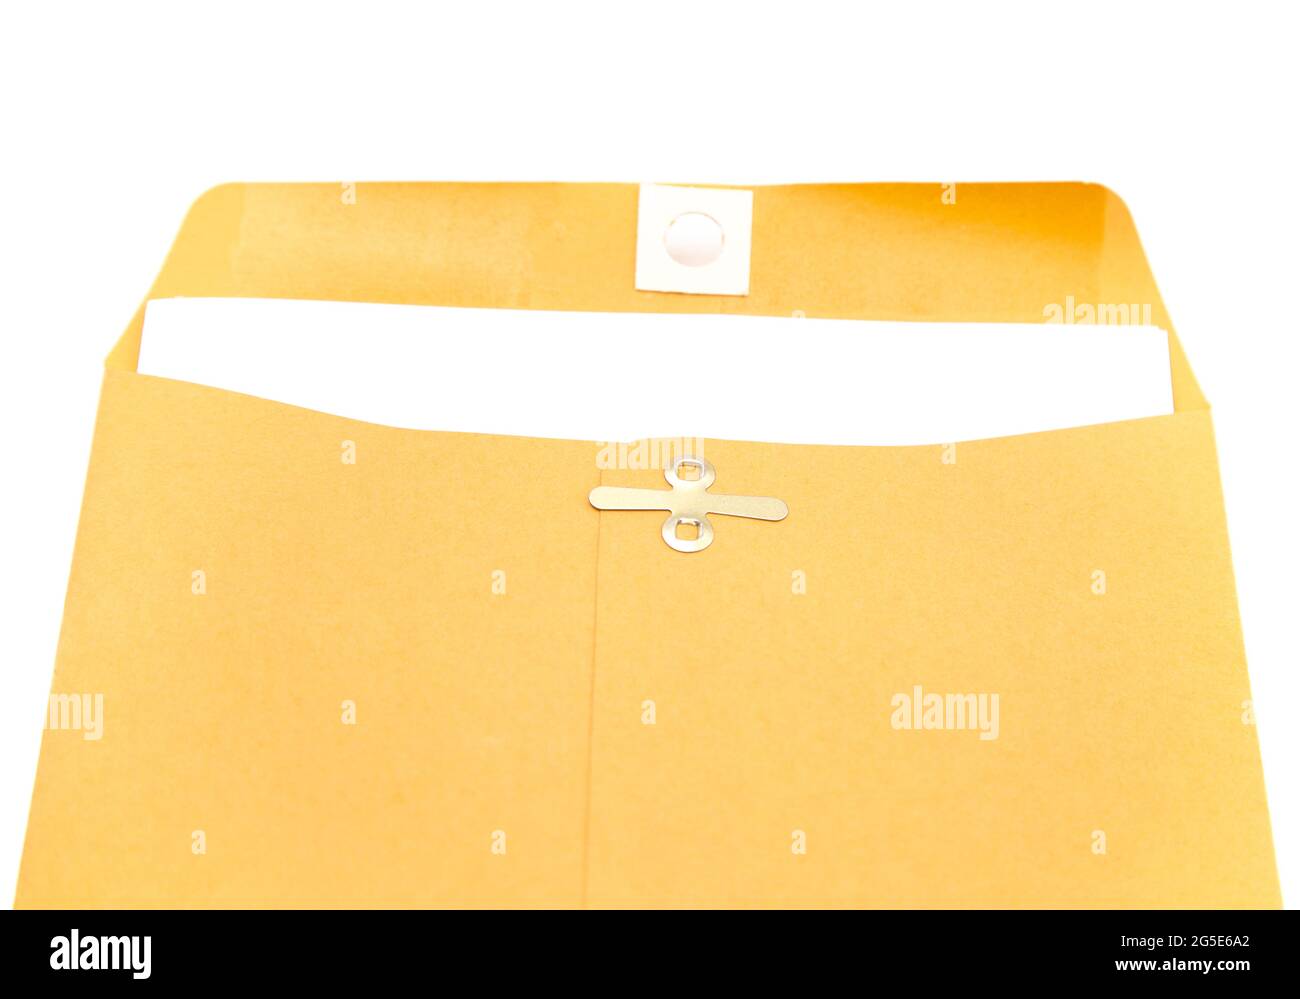 Simple Manilla Envelope on a White Background Stock Photo